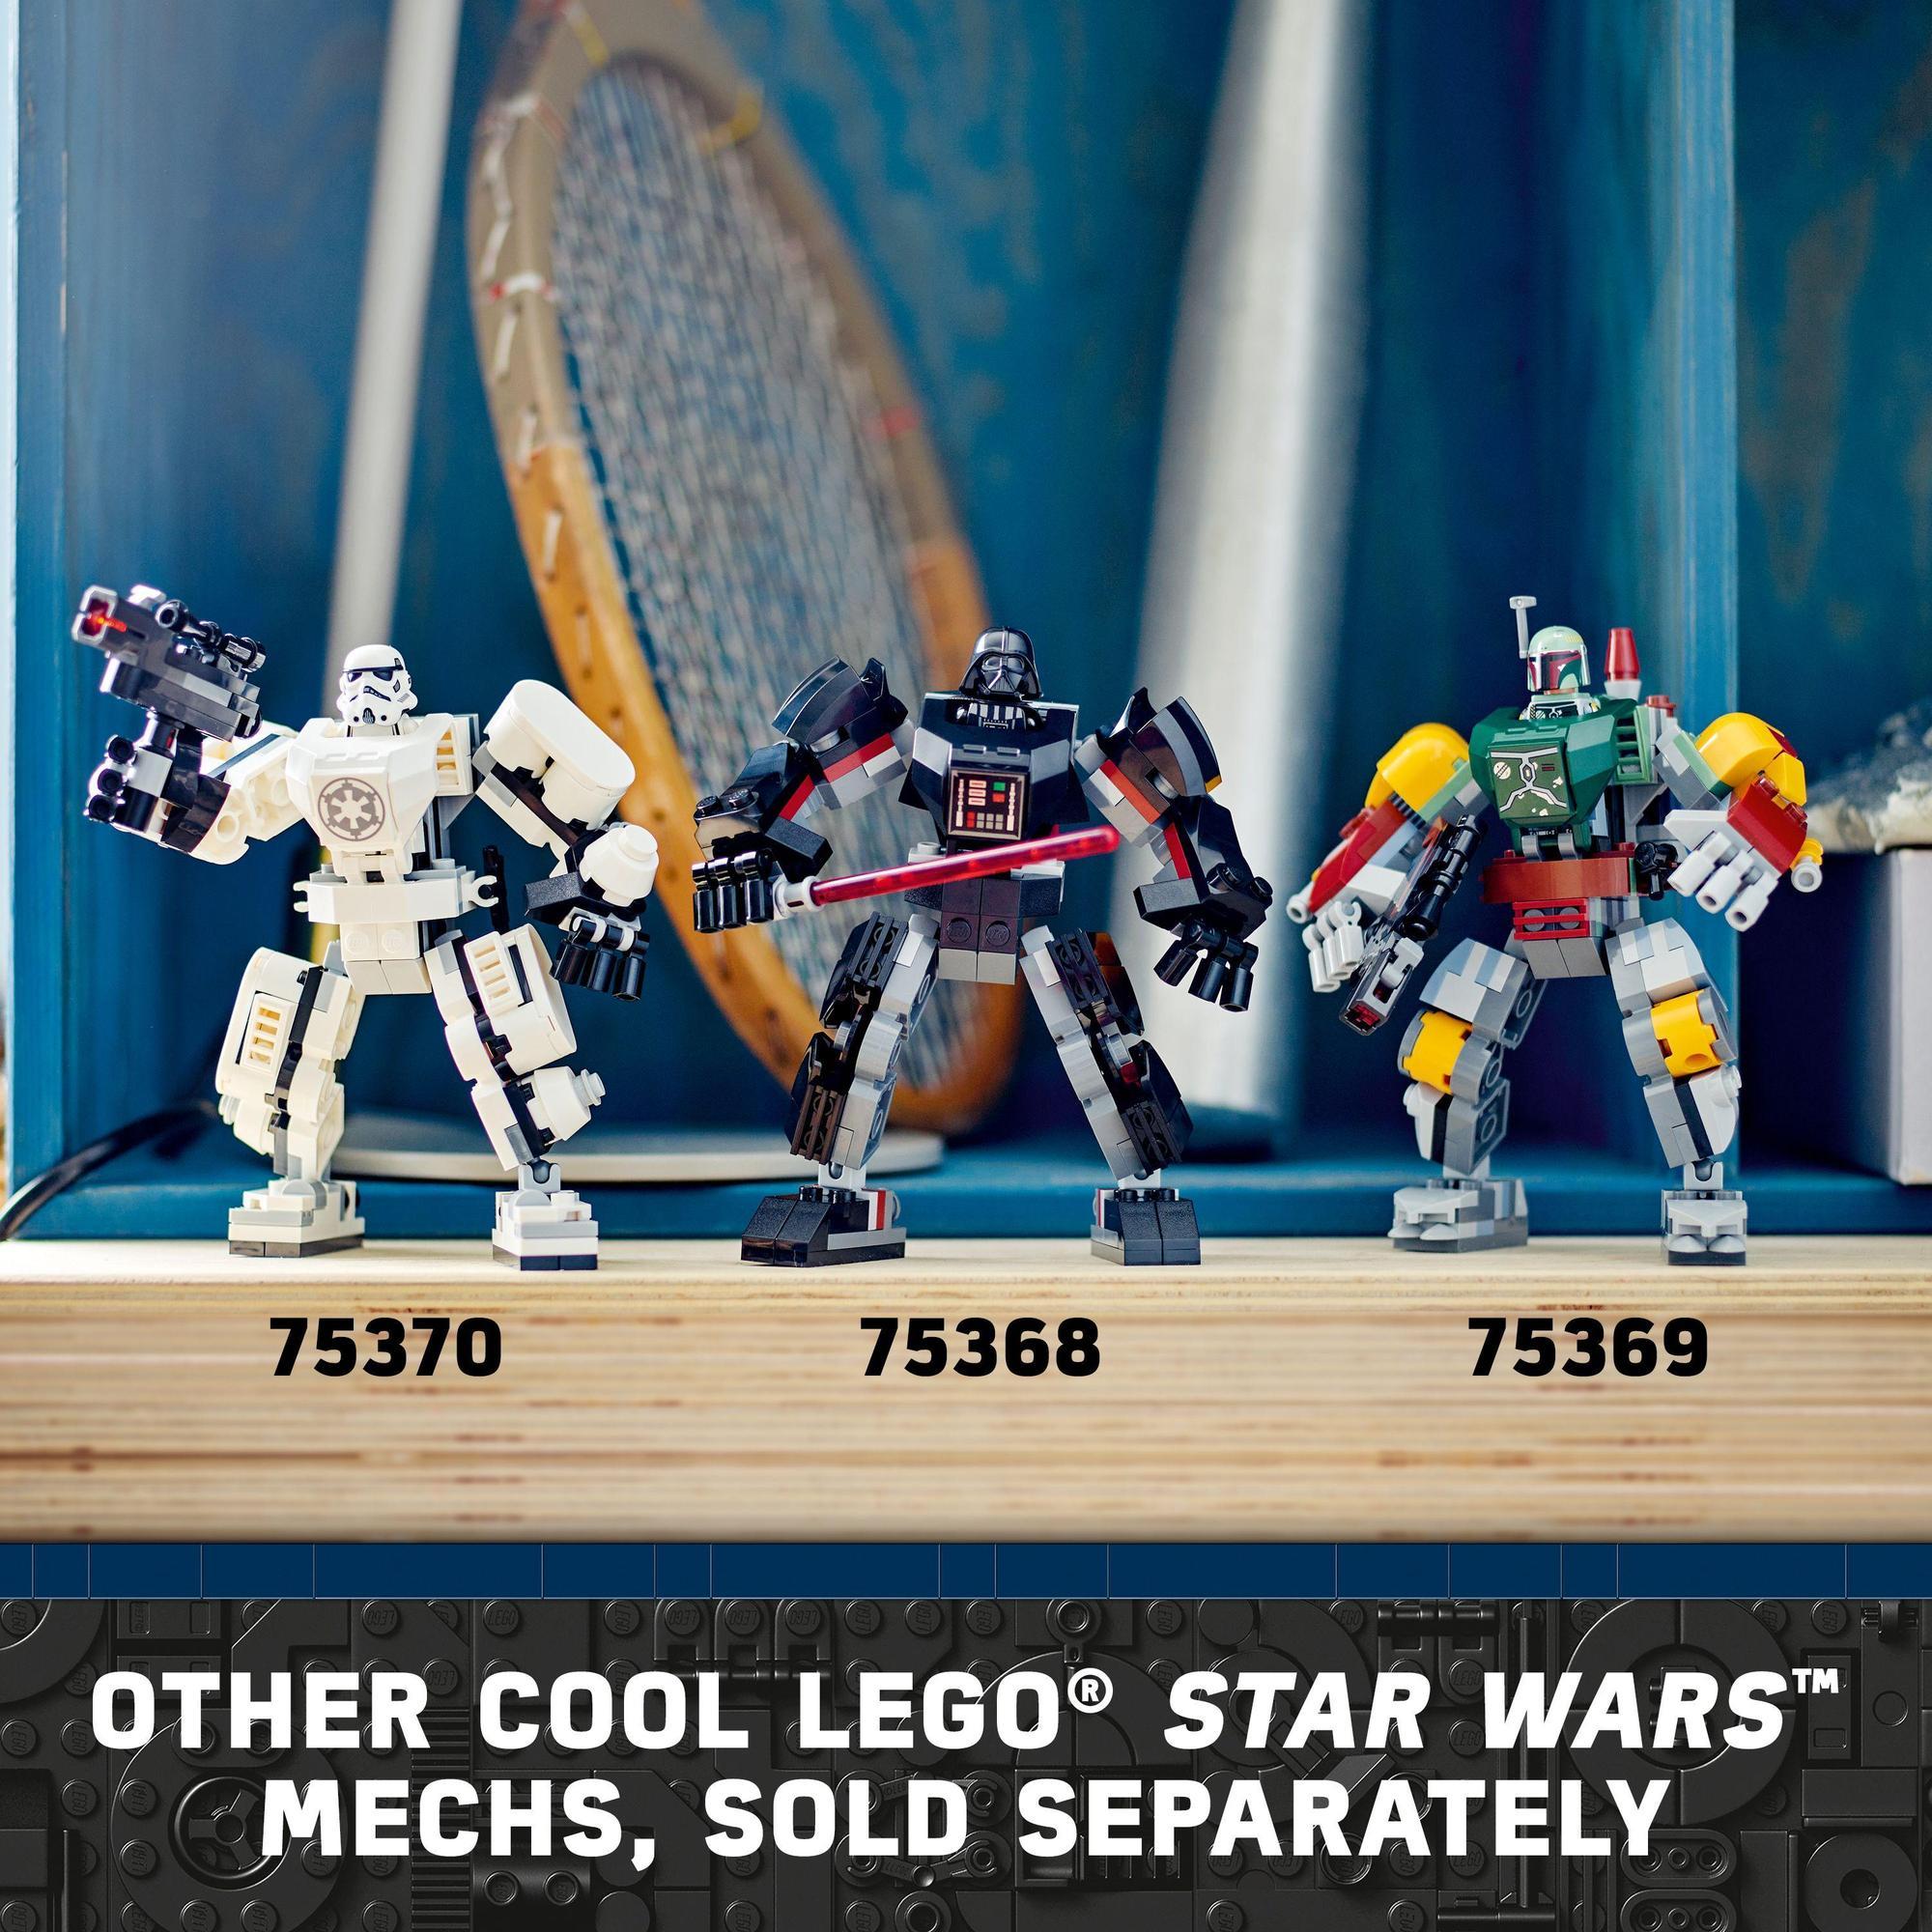 LEGO Star Wars 75369 Đồ chơi lắp ráp Chiến Giáp Boba Fett (155 chi tiết)